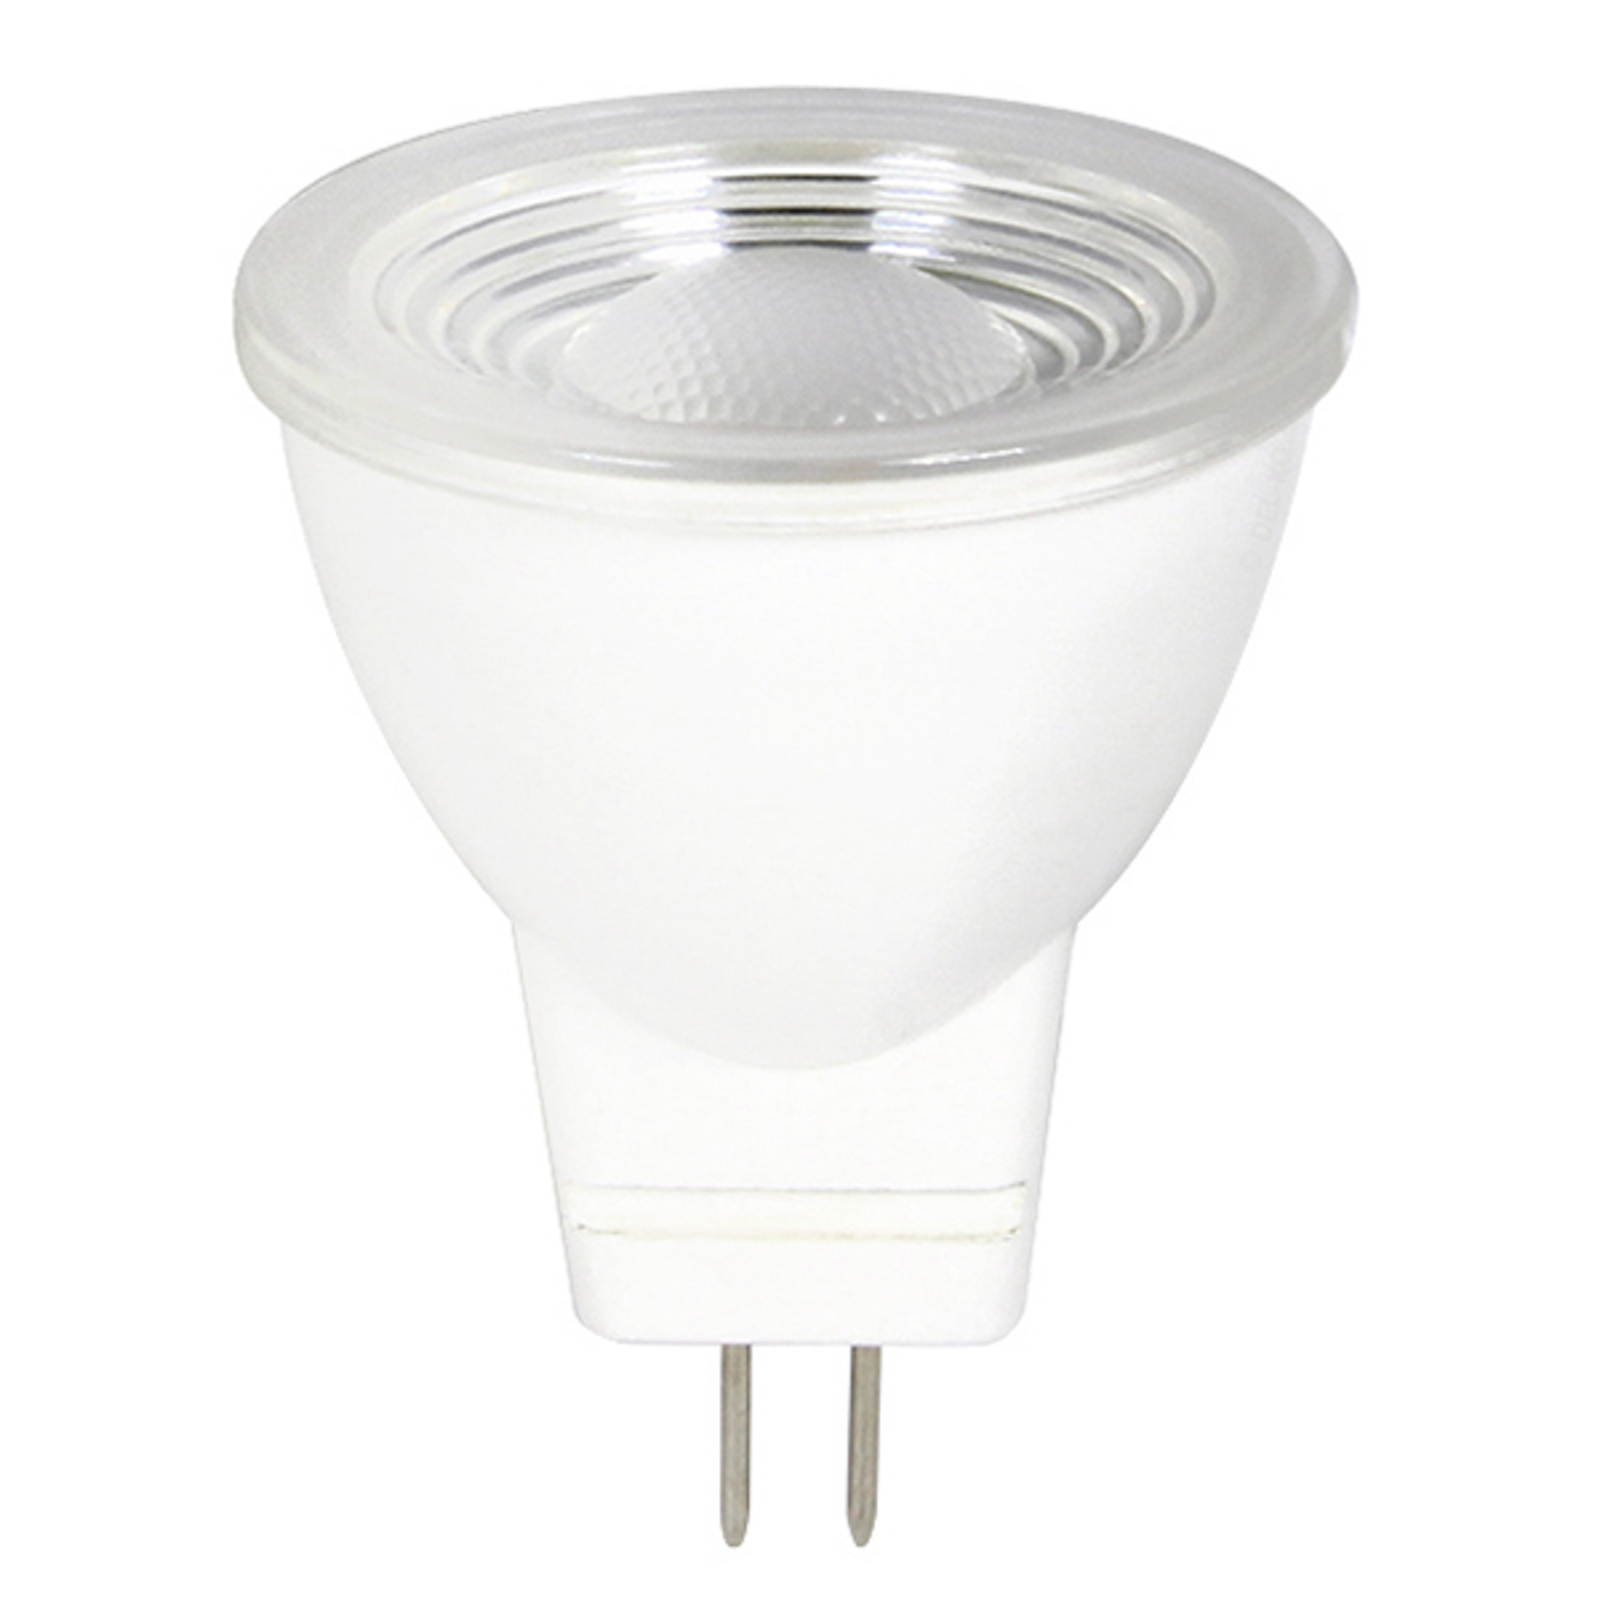 Reflector LED bulb HELSO GU4 MR11, 4W, 830, 60°